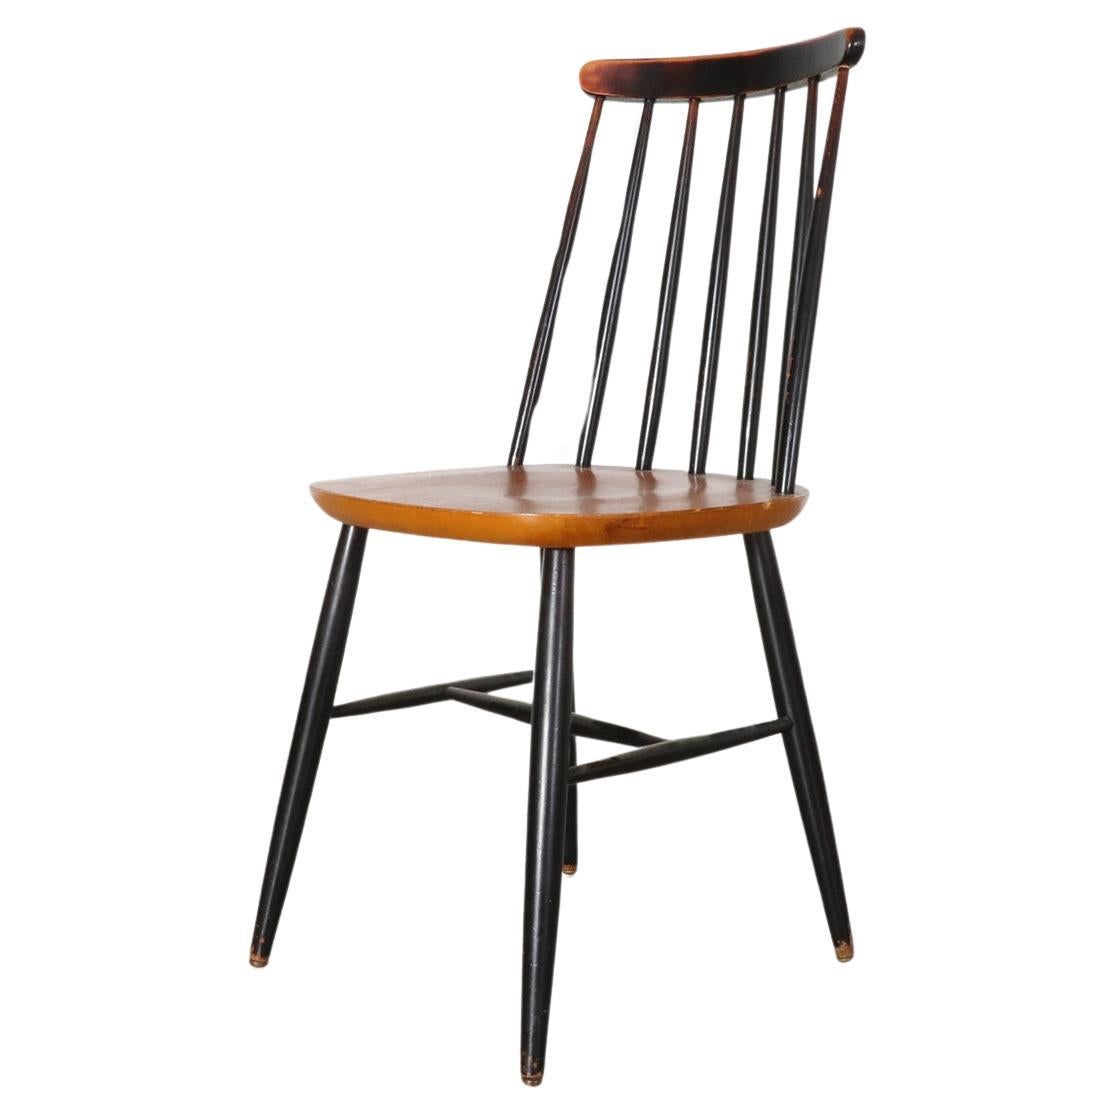 Single Ilmari Tapiovaara Style Spindle Back Chair